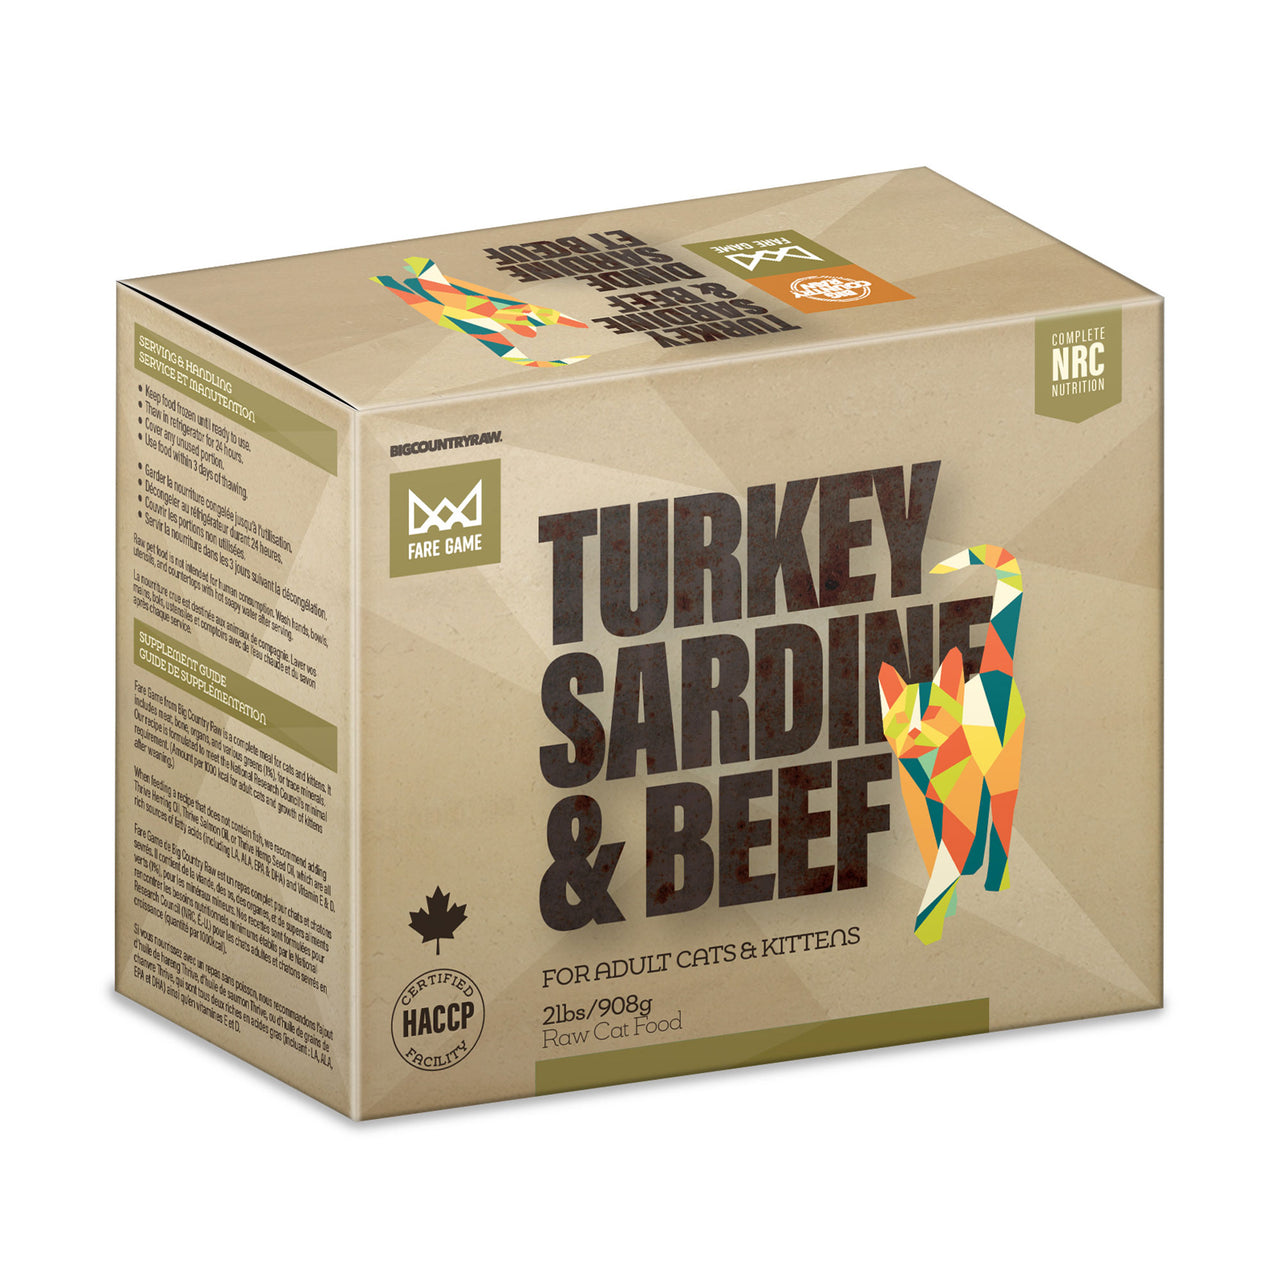 Big Country Raw Turkey, Sardine and Beef Fare Game